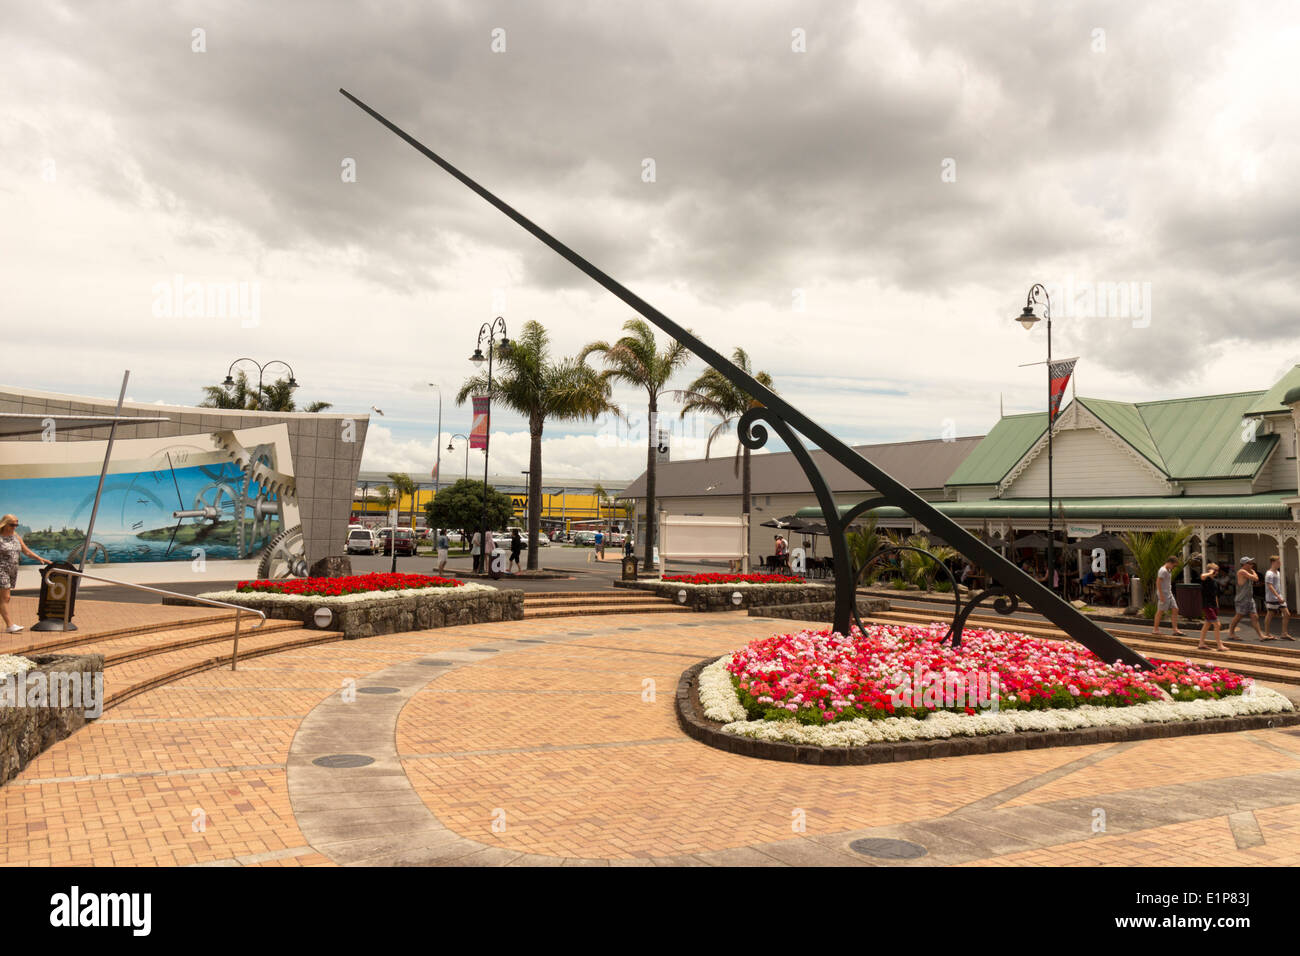 New Zealand Whangarei Clapham's clock museum giant sundial sun dial Stock Photo